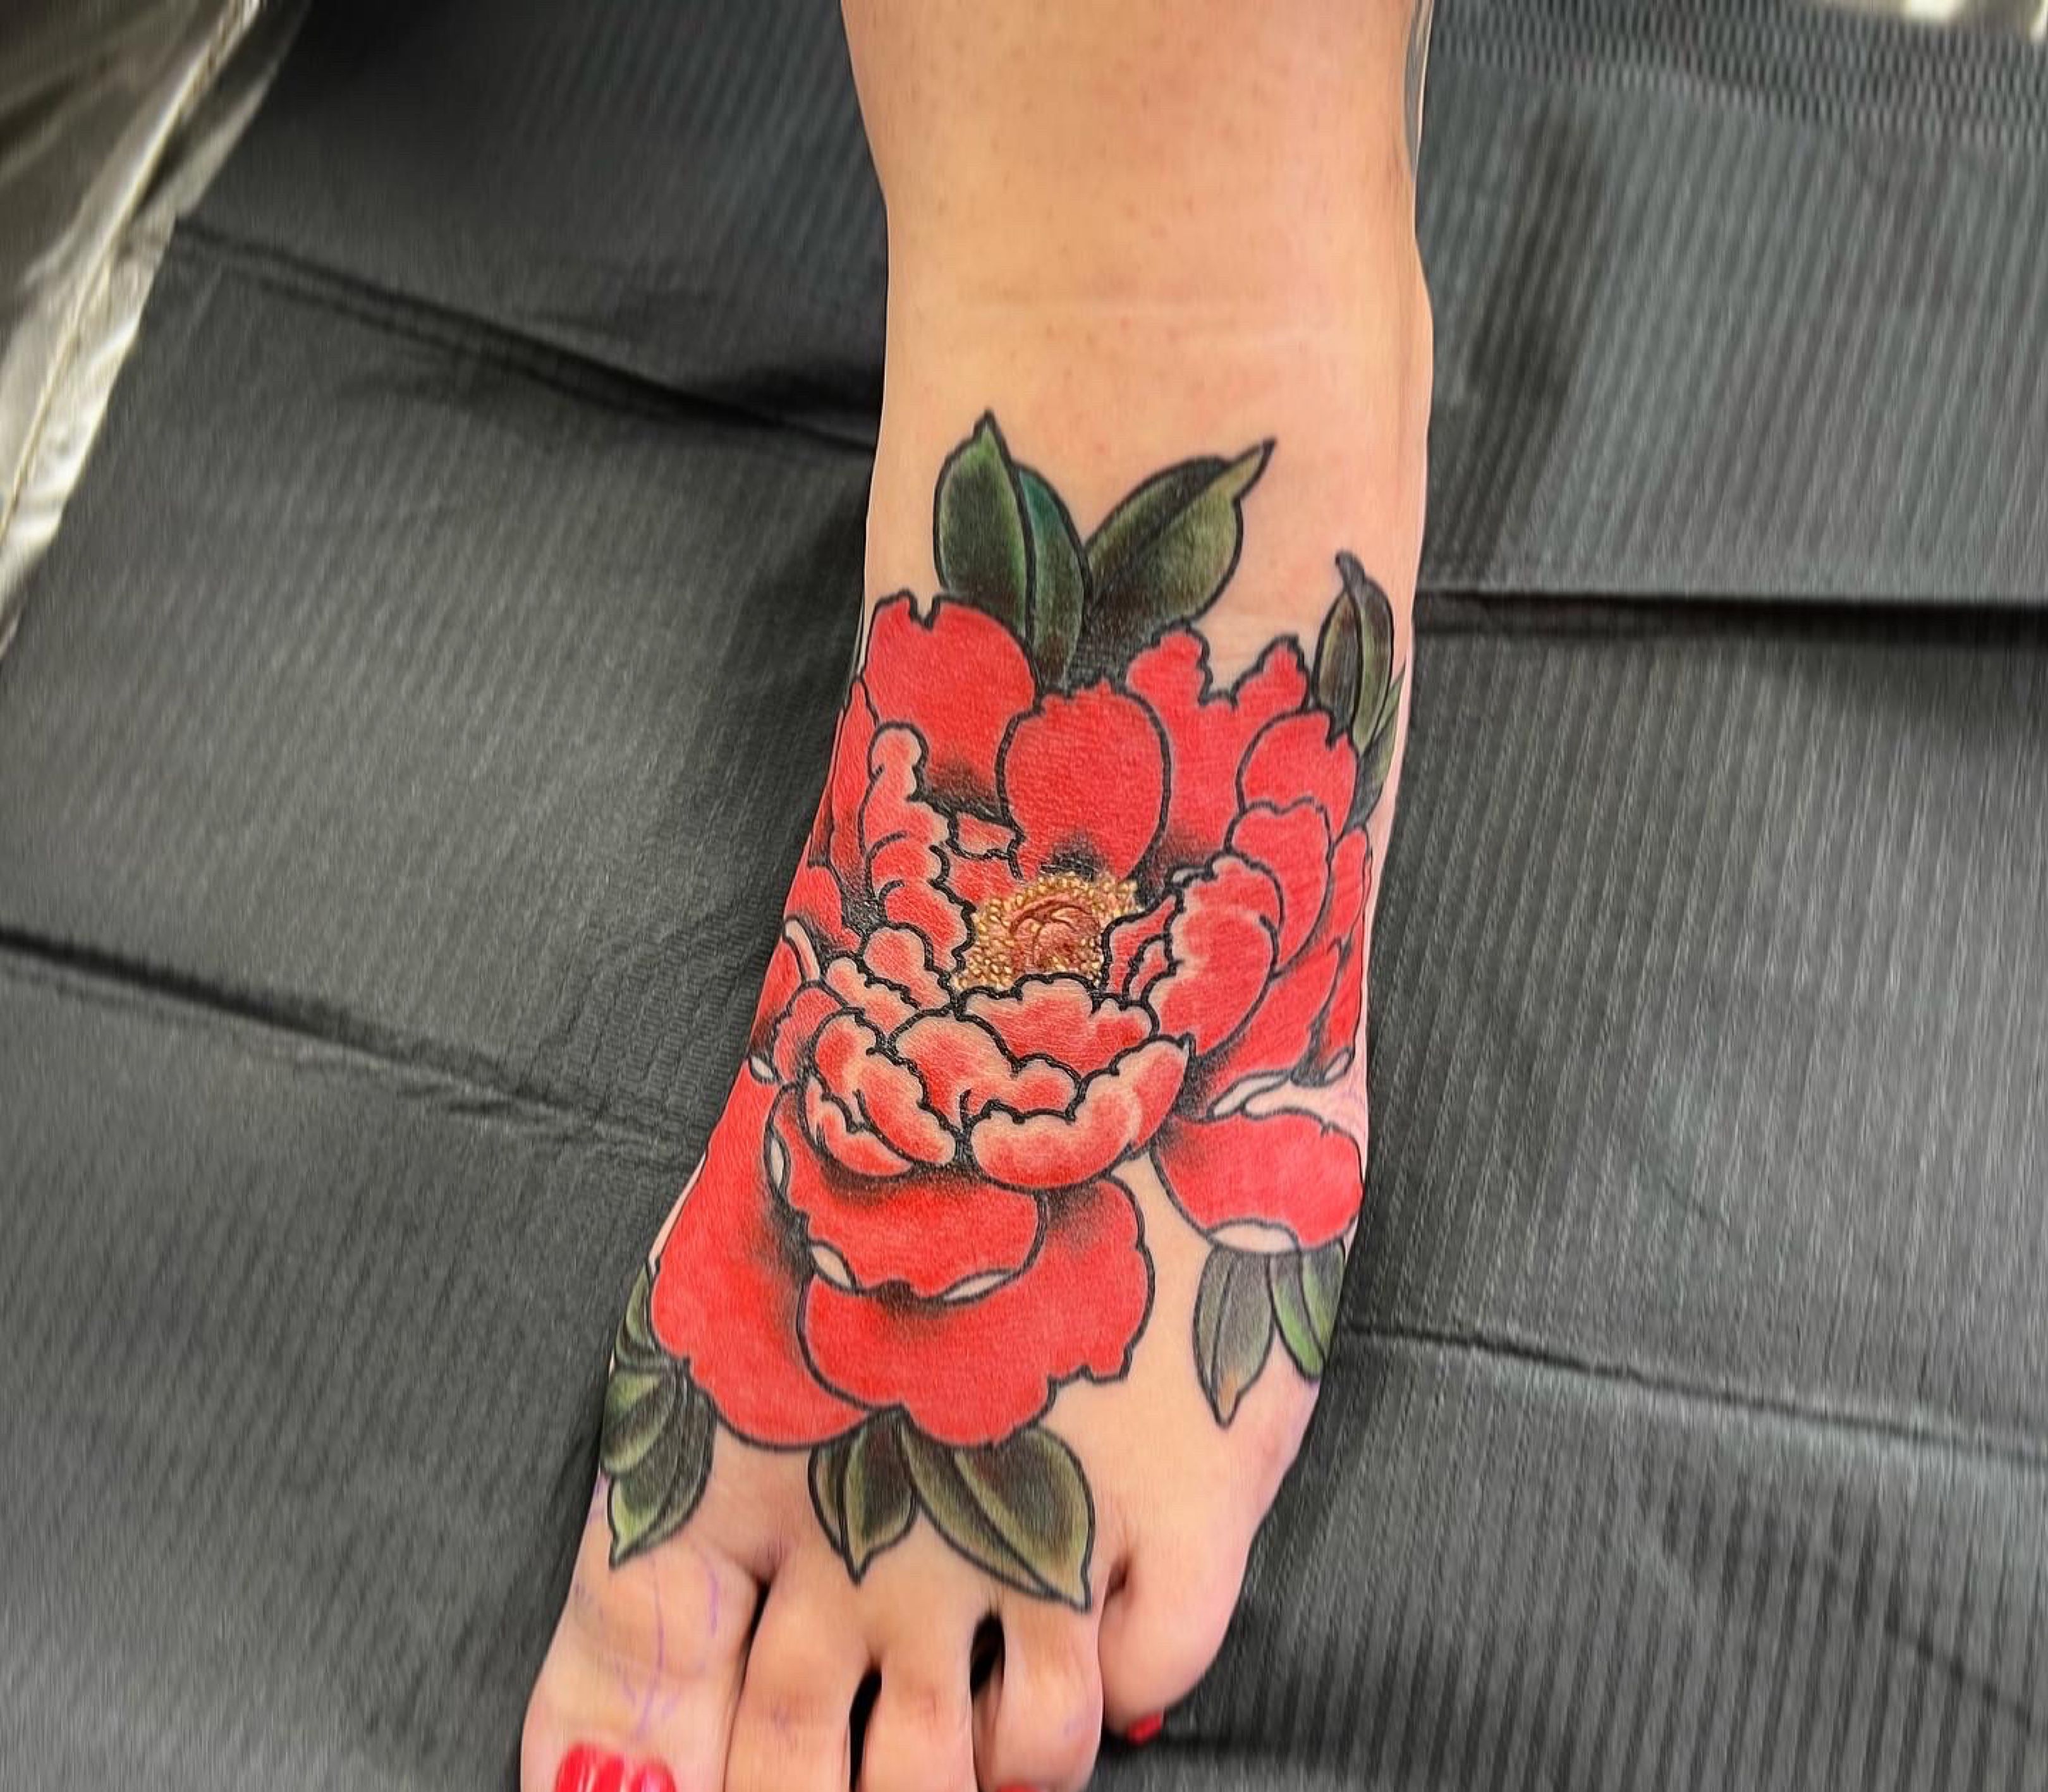 Flower tattoo on the foot - Tattoogrid.net